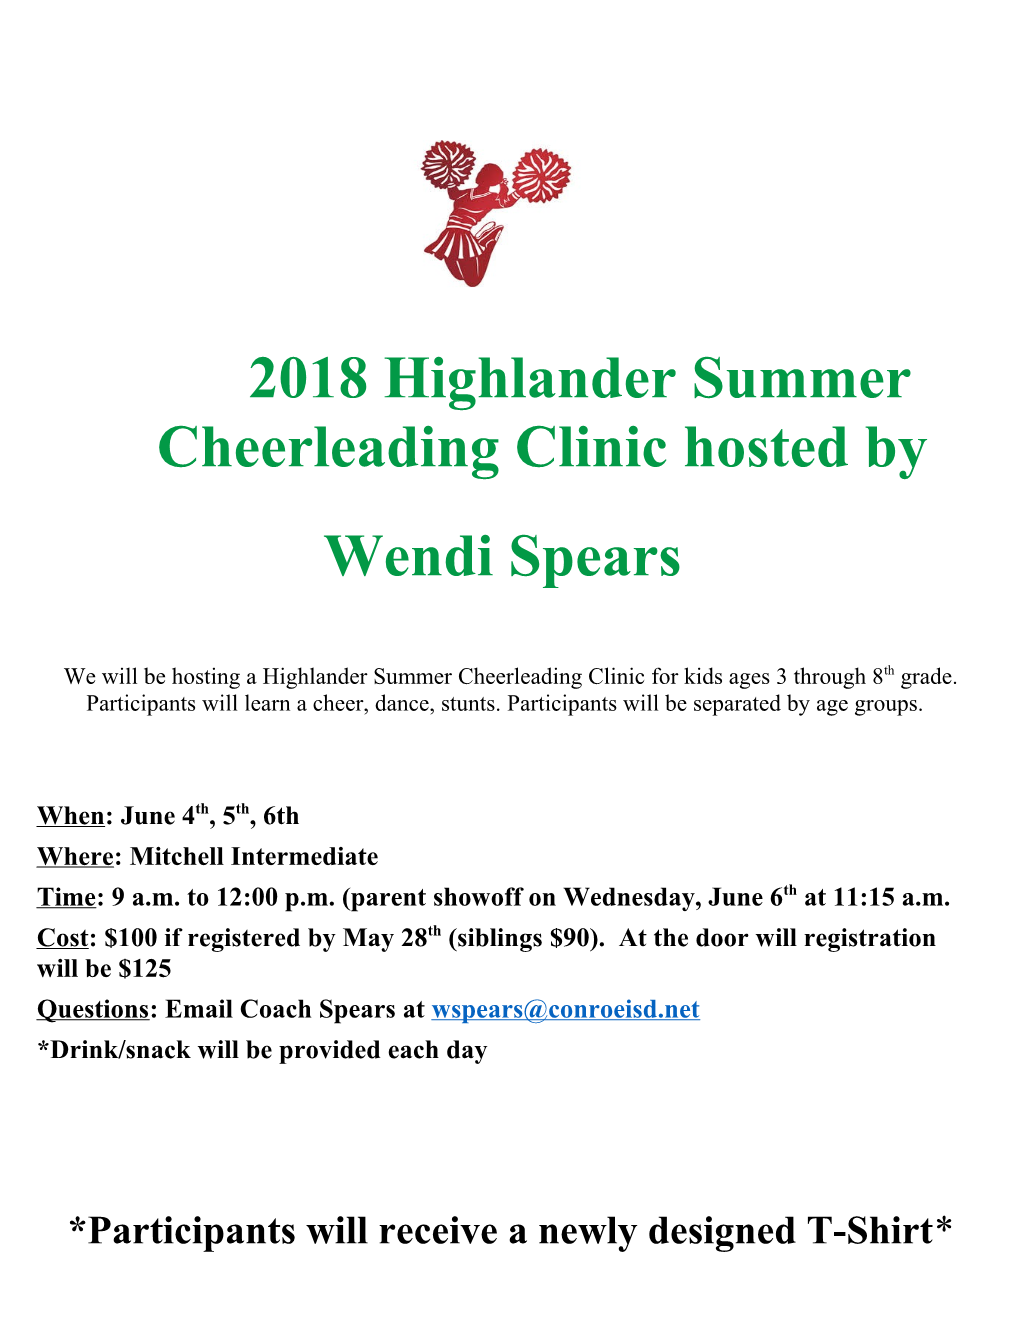 2018 Highlander Summer Cheerleading Clinichosted By